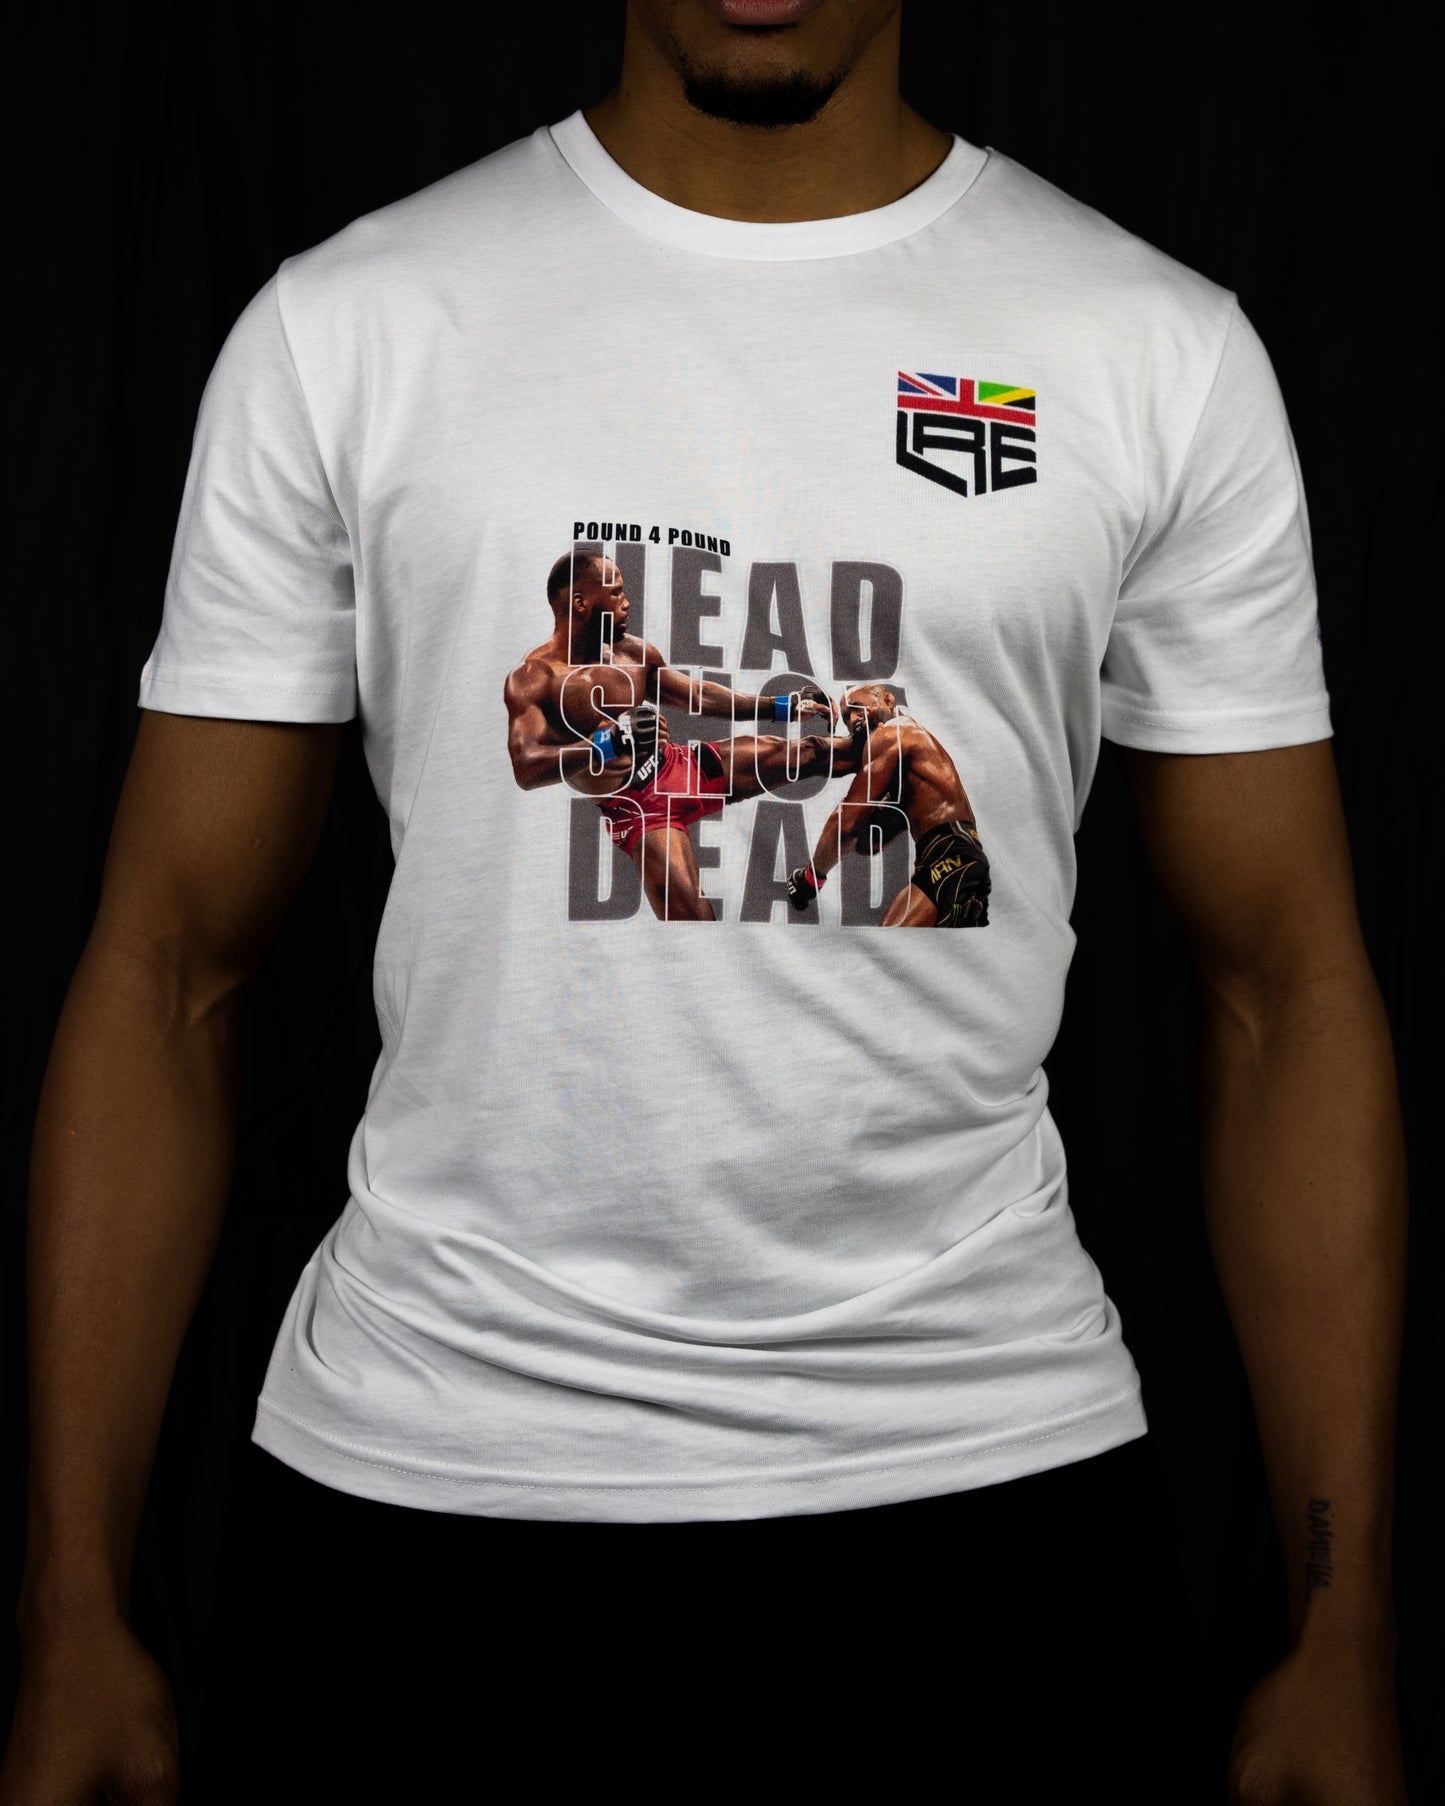 Limited Edition: Leon "Rocky" Edwards: "Pound for Pound, Headshot Dead." T-Shirt